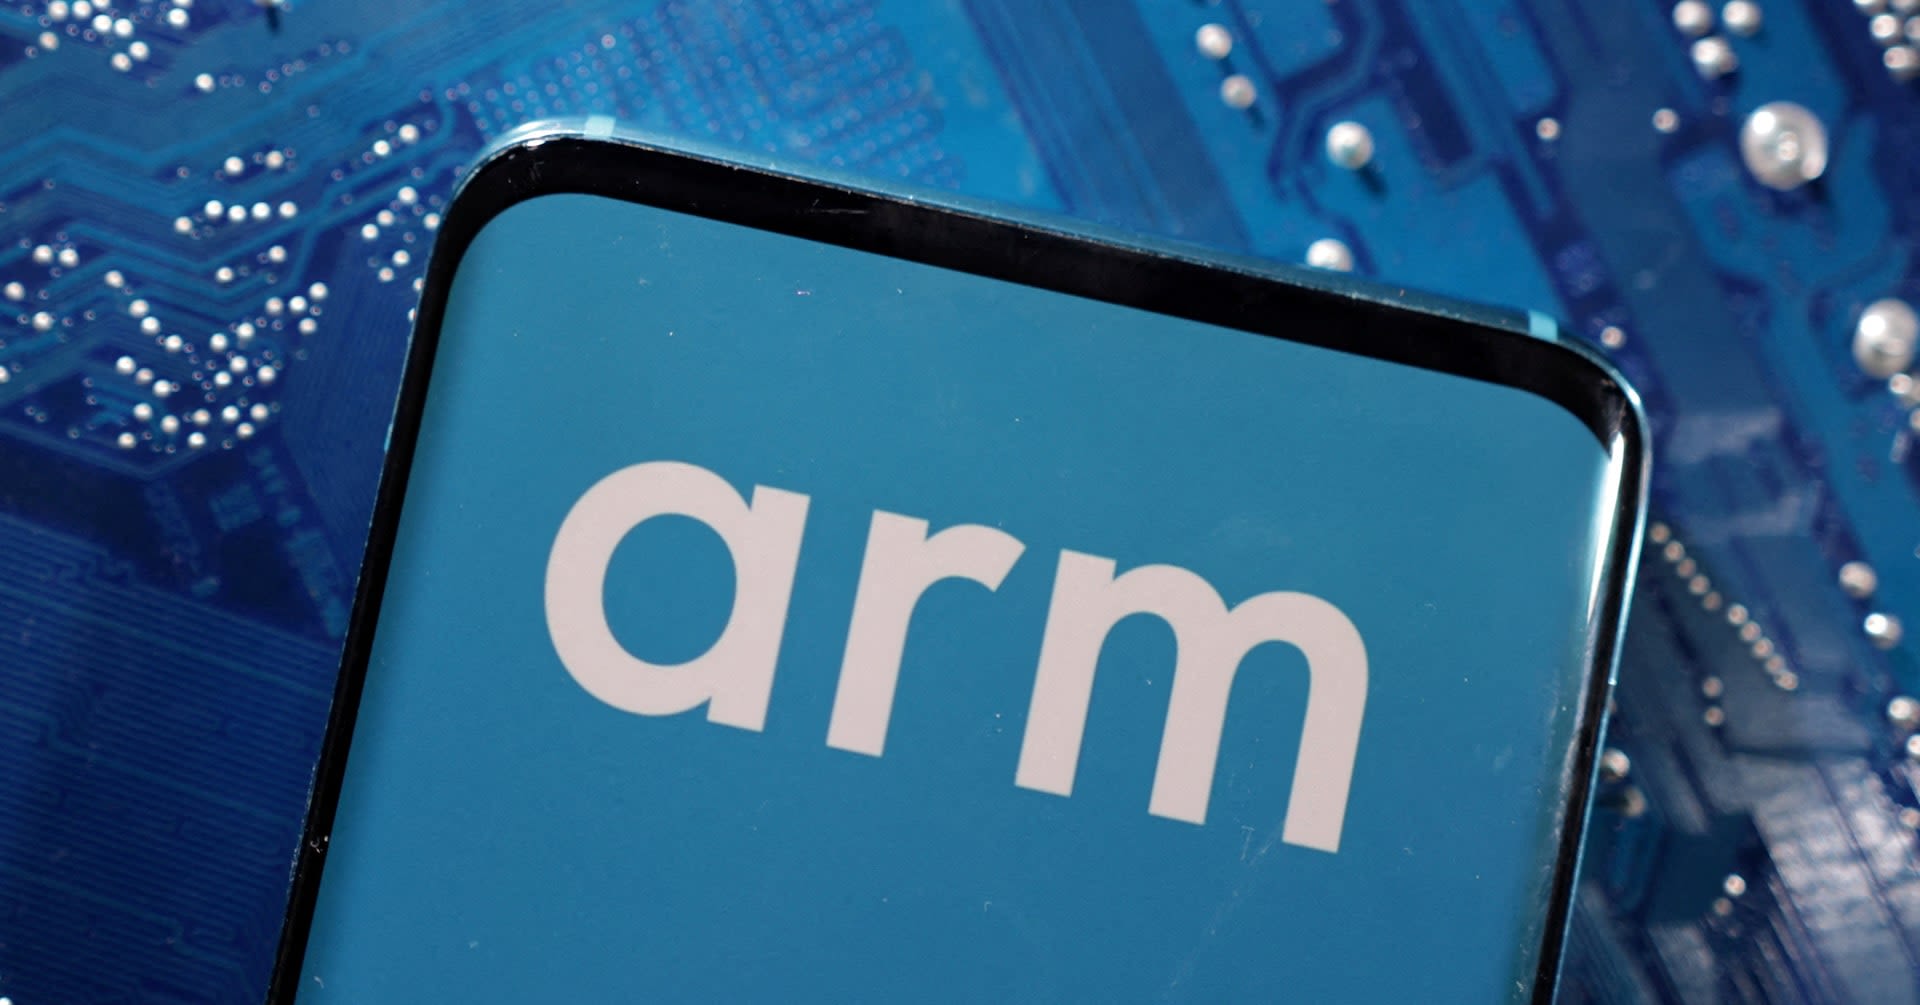 Arm shares fall as tepid forecast takes shine off AI optimism